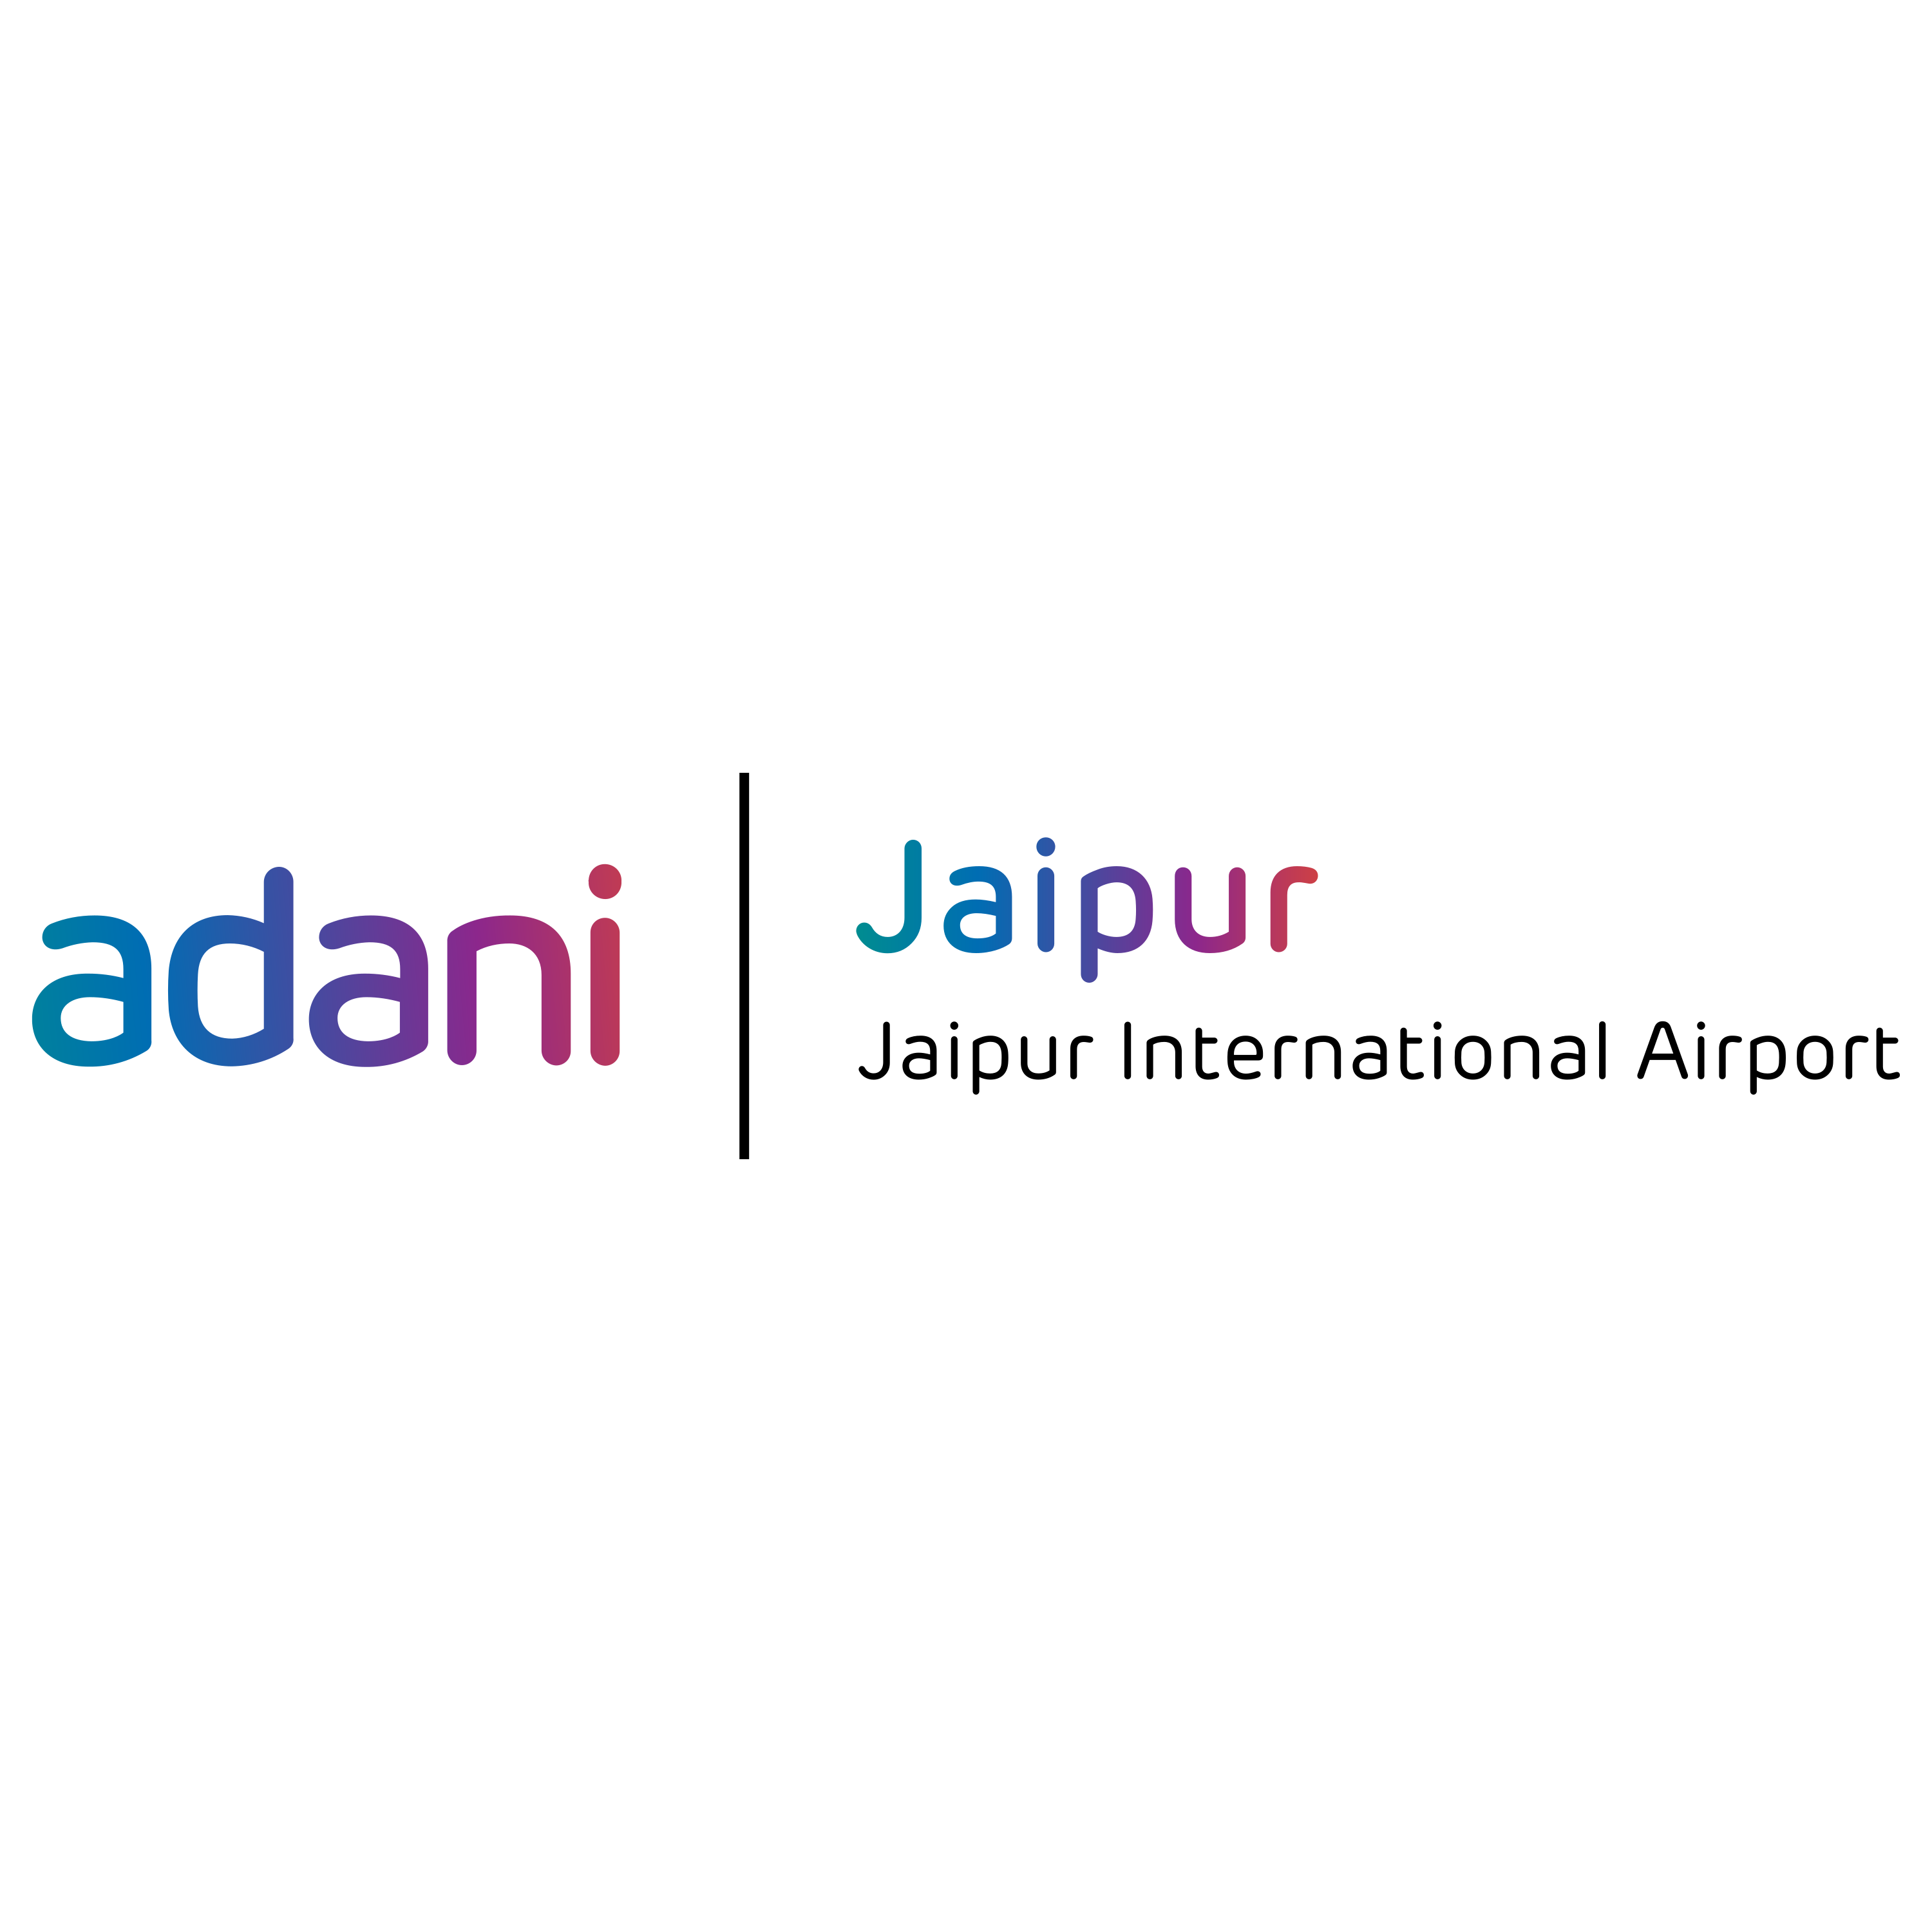 Jaipur Airport Logo Transparent Image